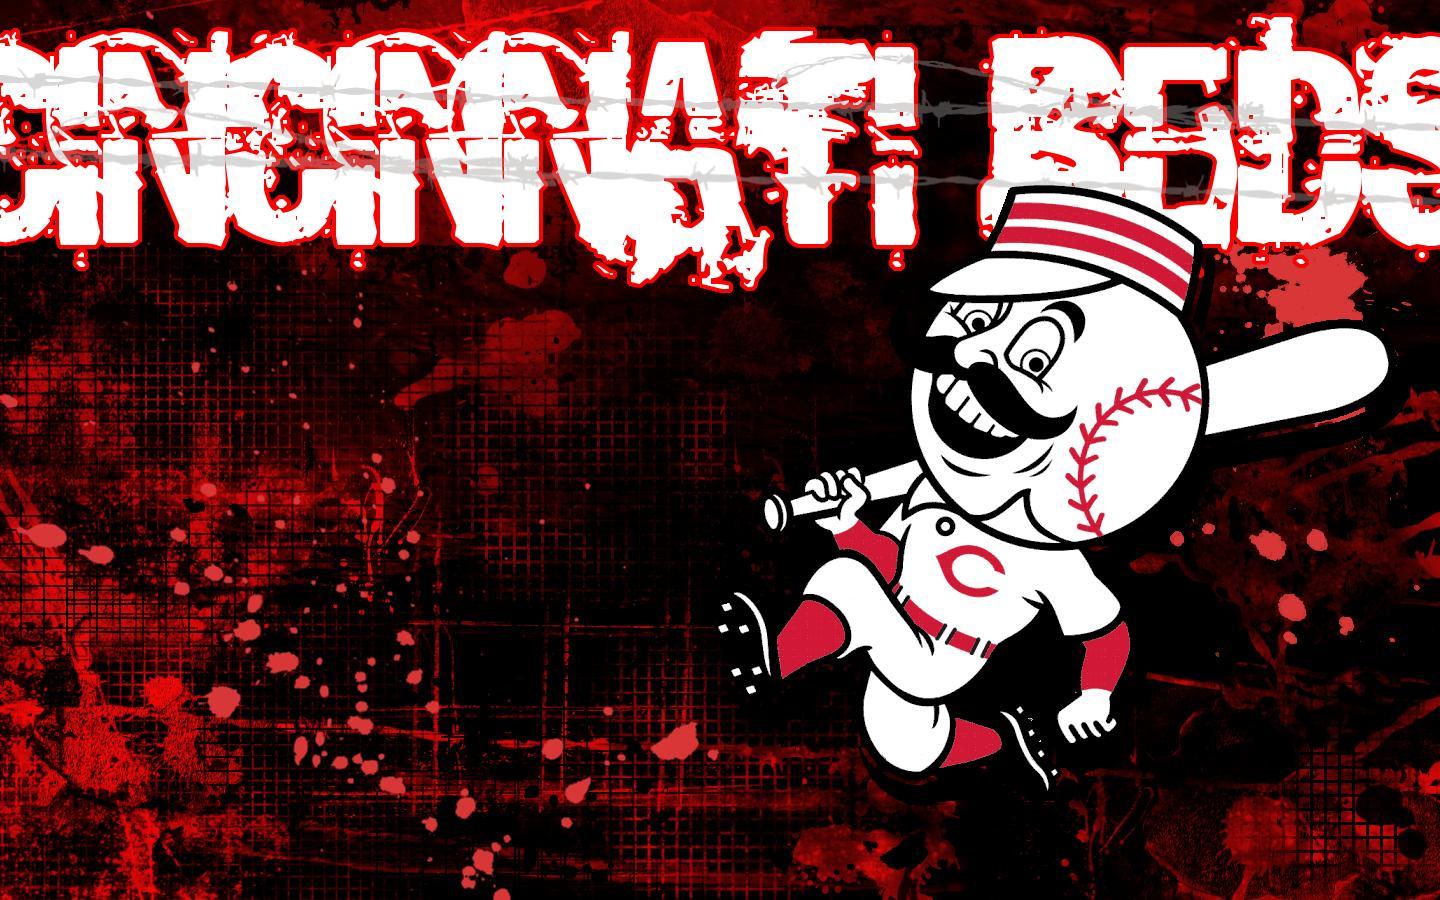 Free Cincinnati Reds Image and Wallpaper for Mac, PC. BsnSCB